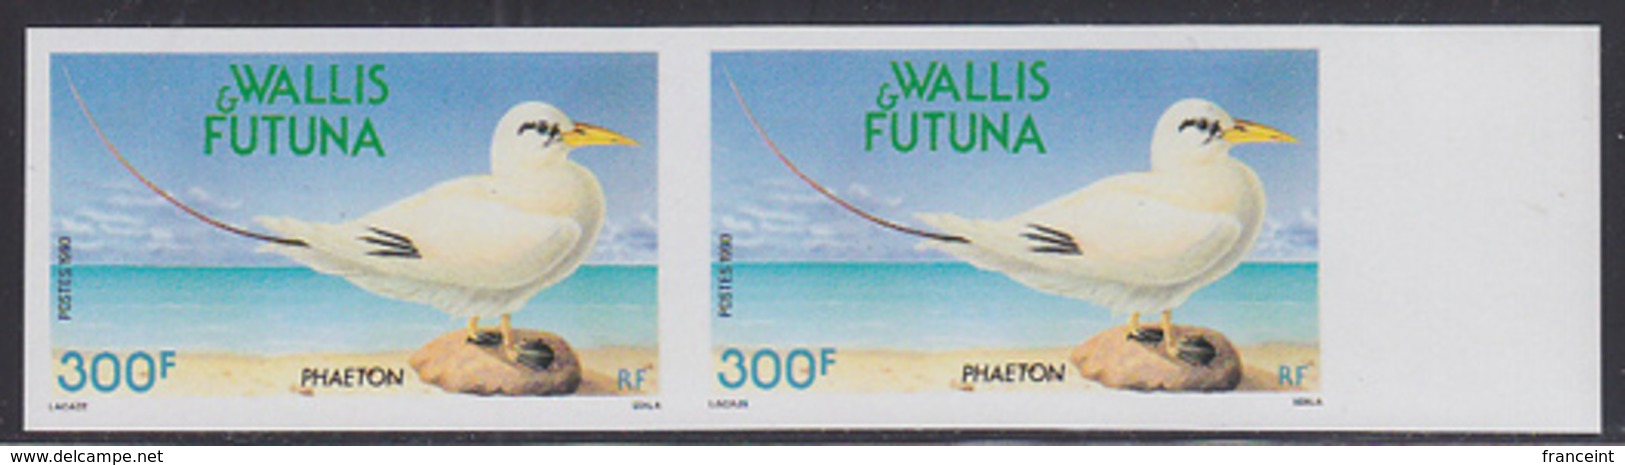 WALLIS & FUTUNA (1990) Phaeton. Imperforate Pair. Scott No 393, Yvert No 398. - Non Dentellati, Prove E Varietà